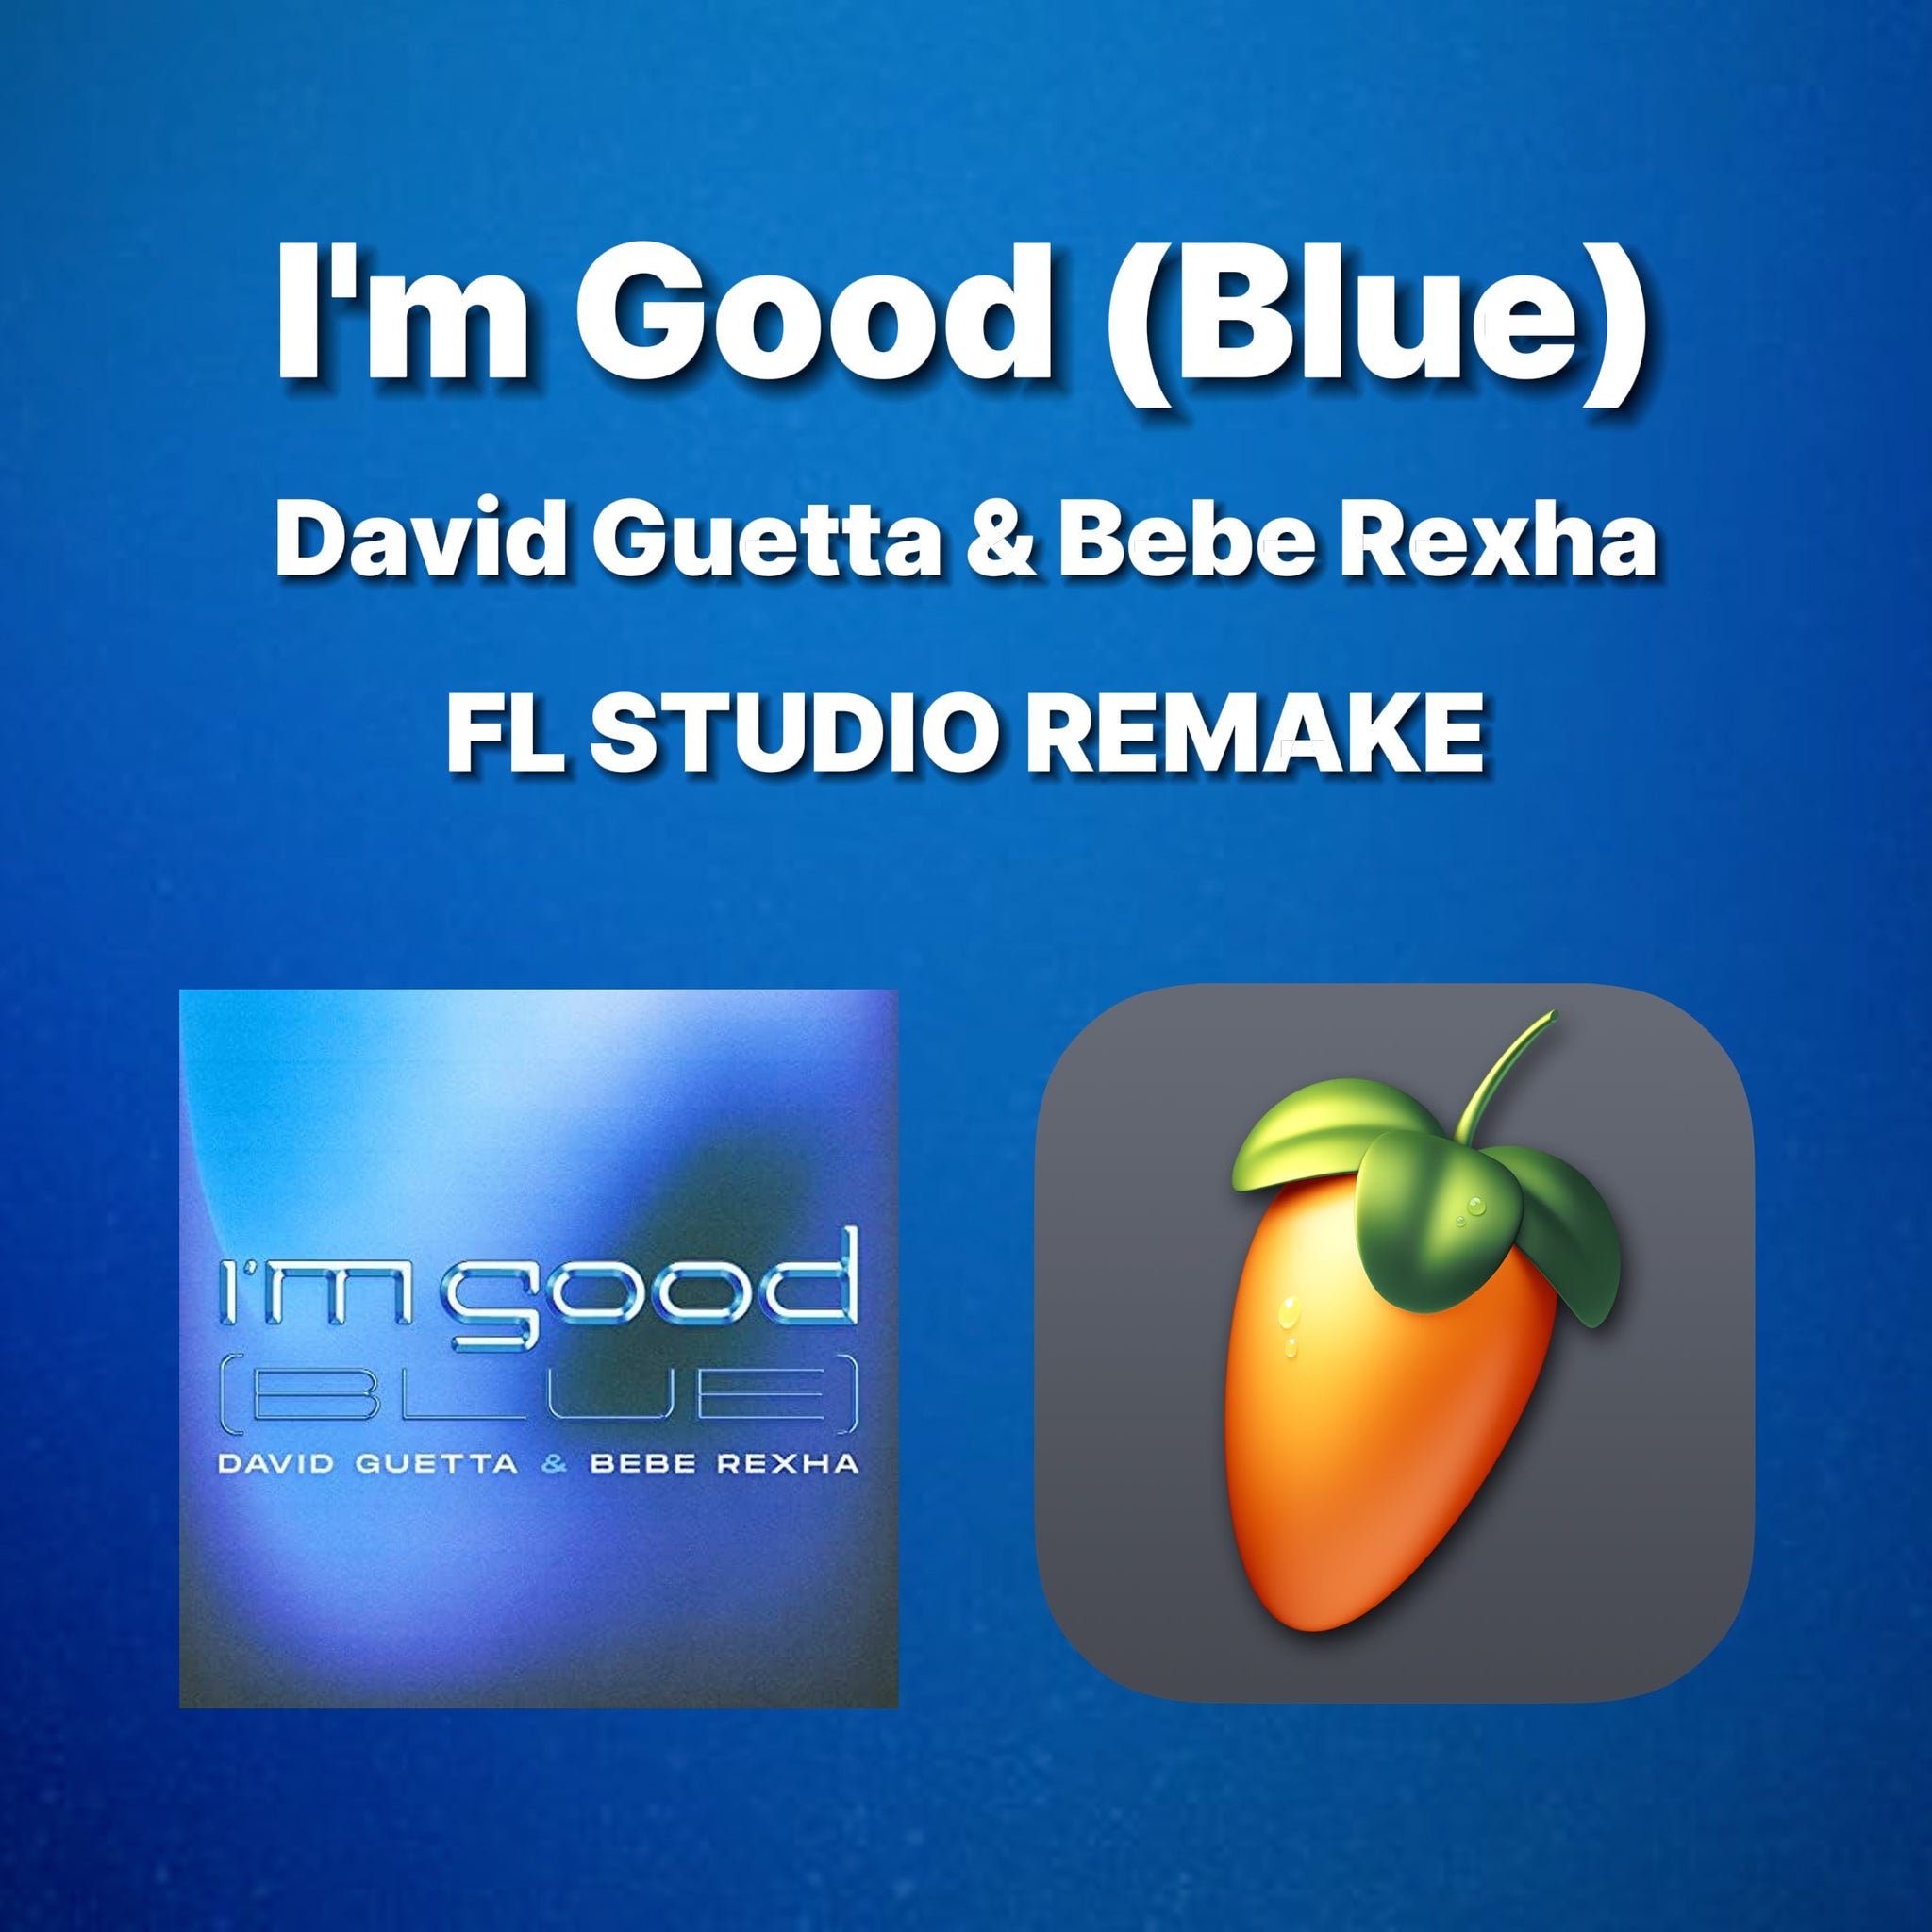 David Guetta & Bebe Rexha - I'm Good (Blue) [FL Studio Remake] - CR Music - Tunebat Marketplace